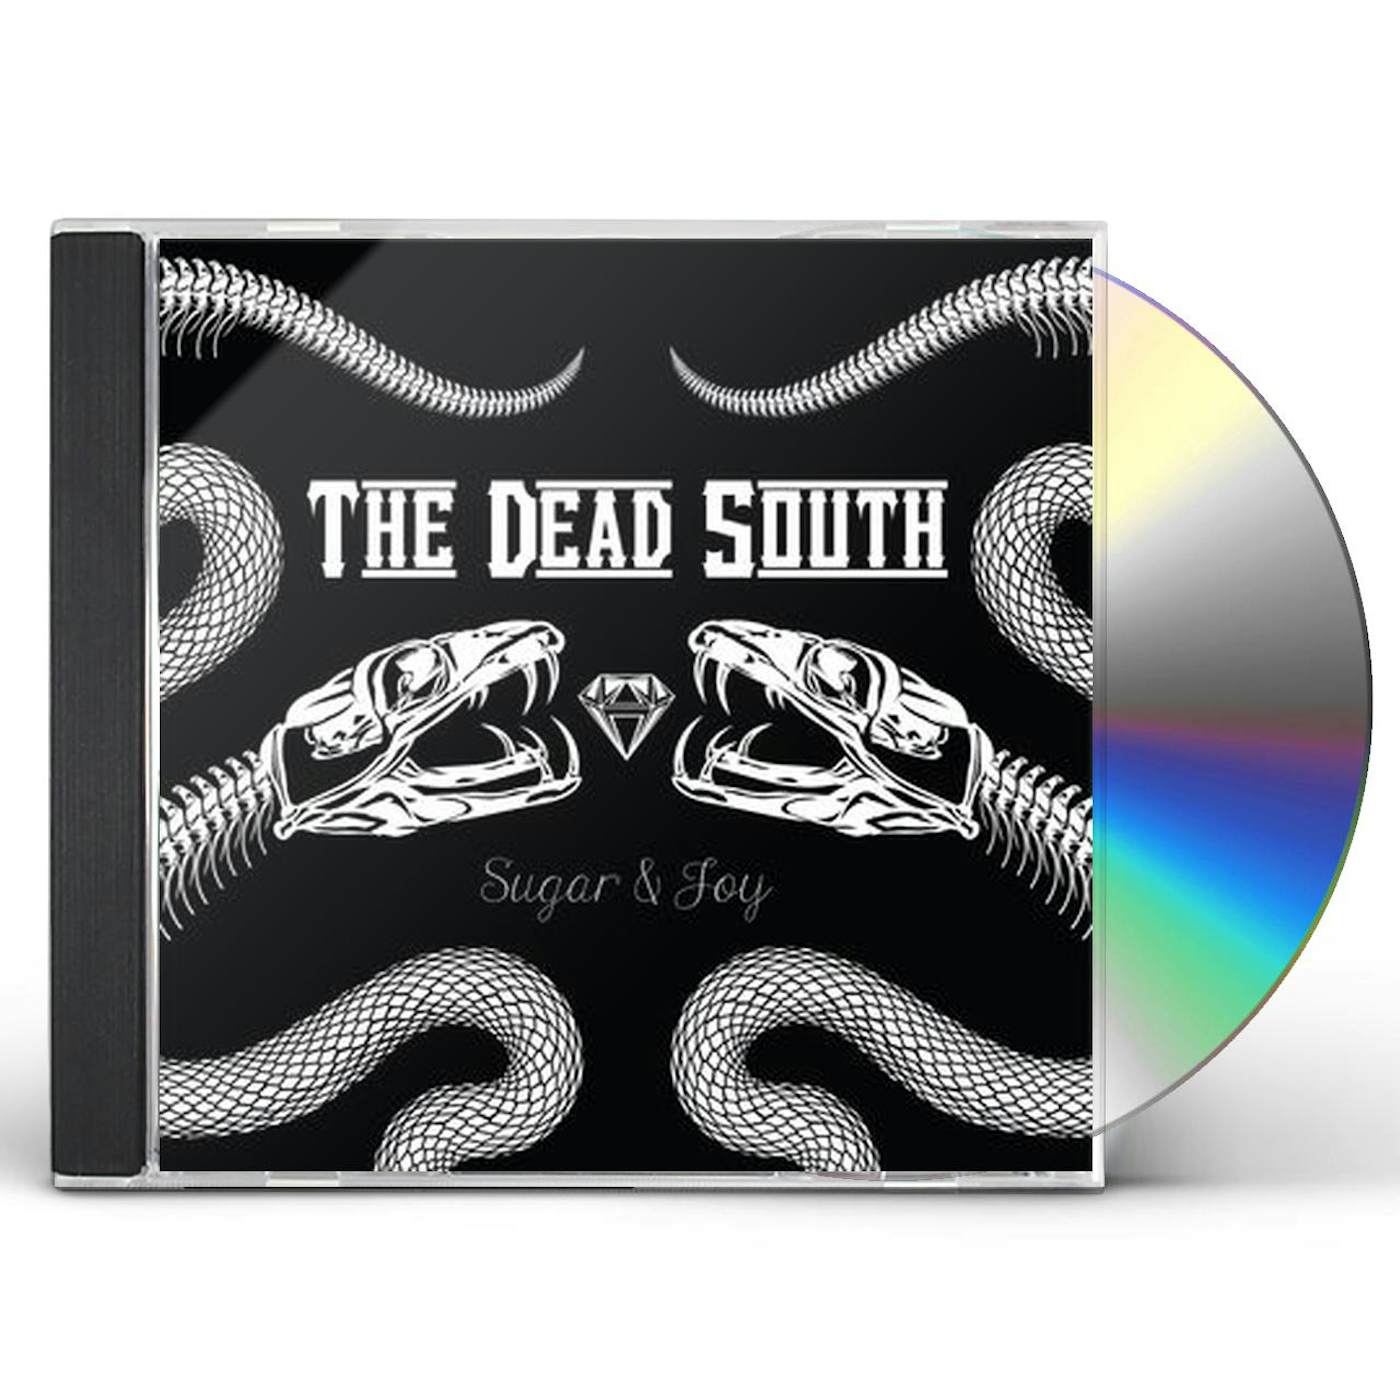 The Dead South SUGAR & JOY CD